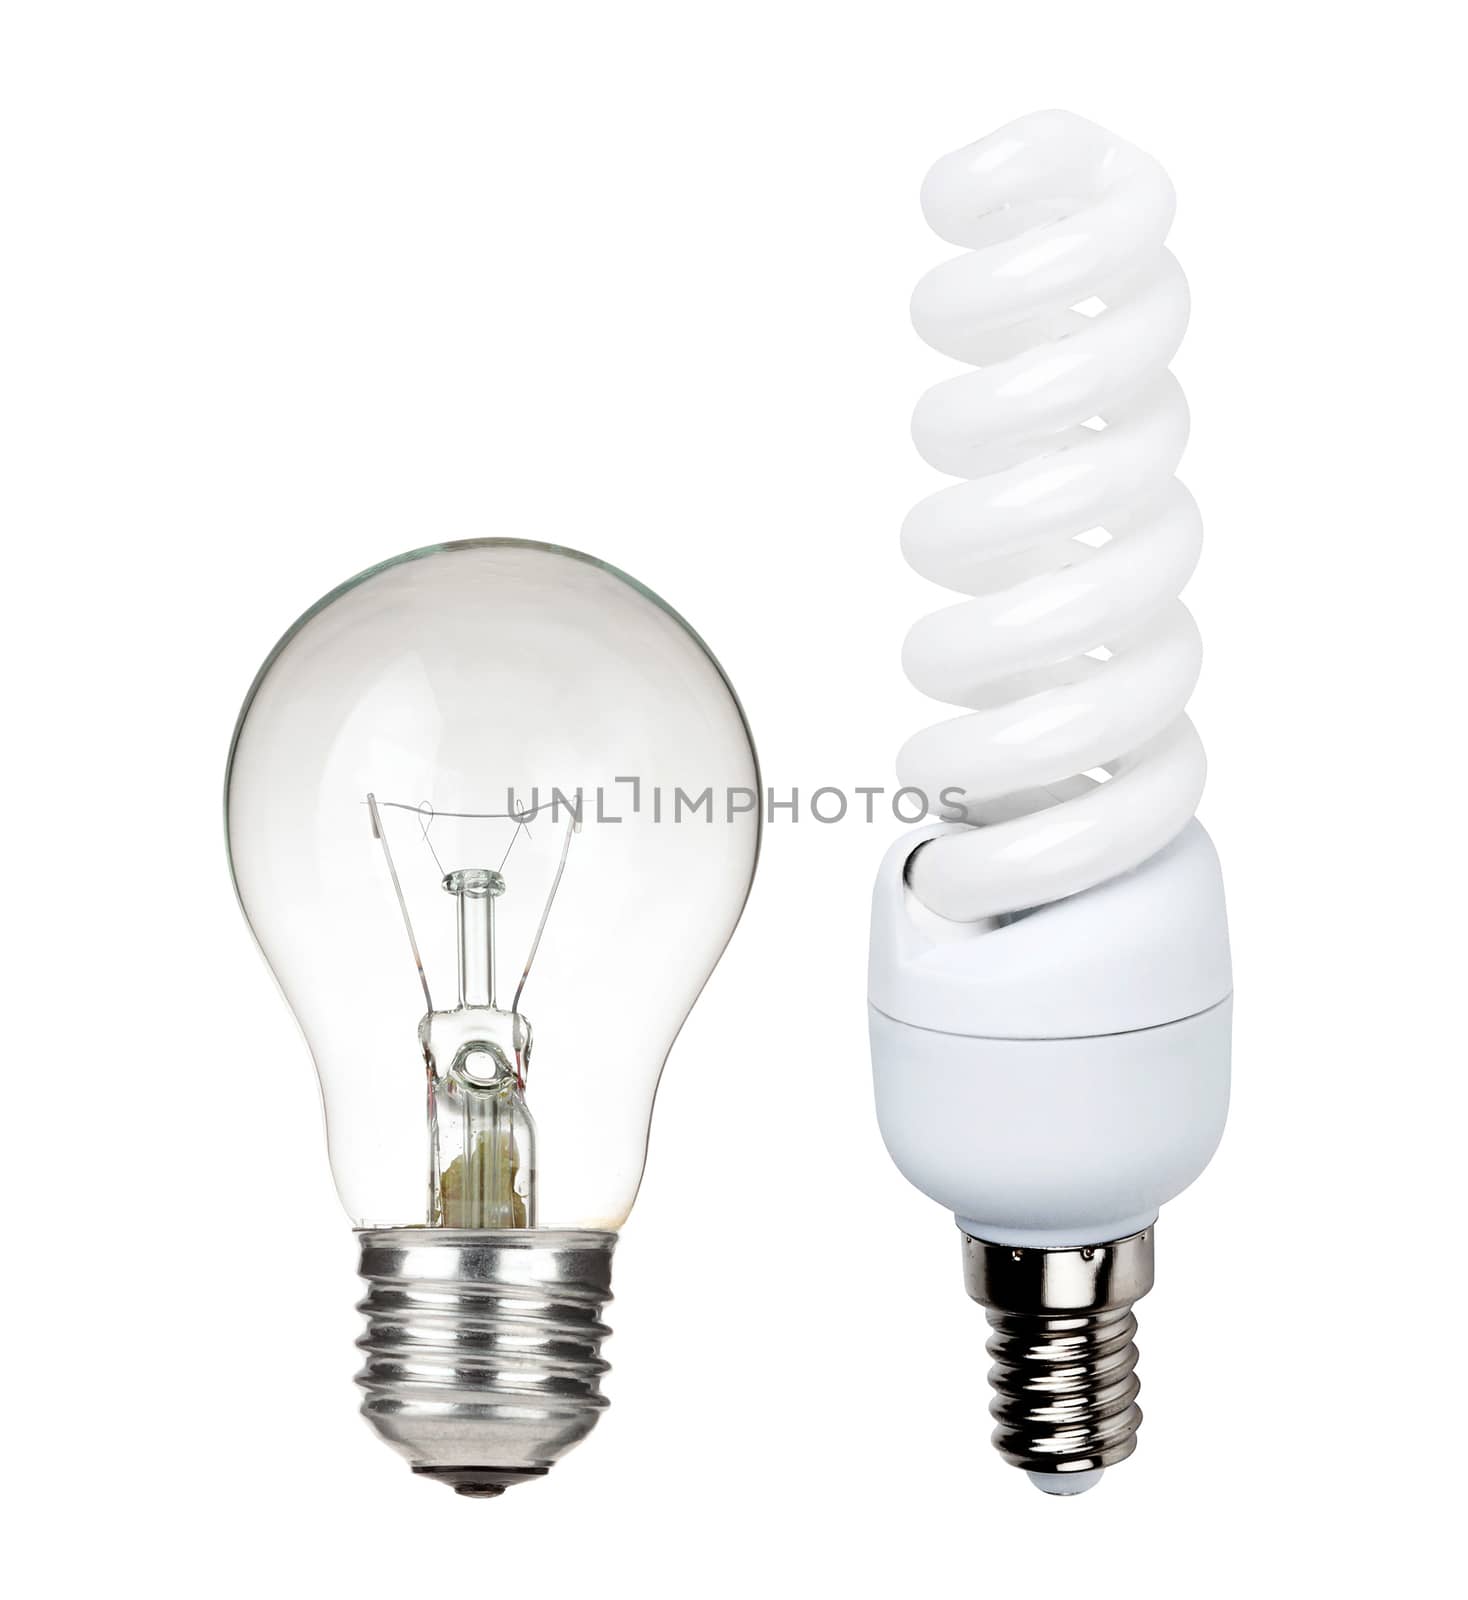 different light bulbs by ozaiachin